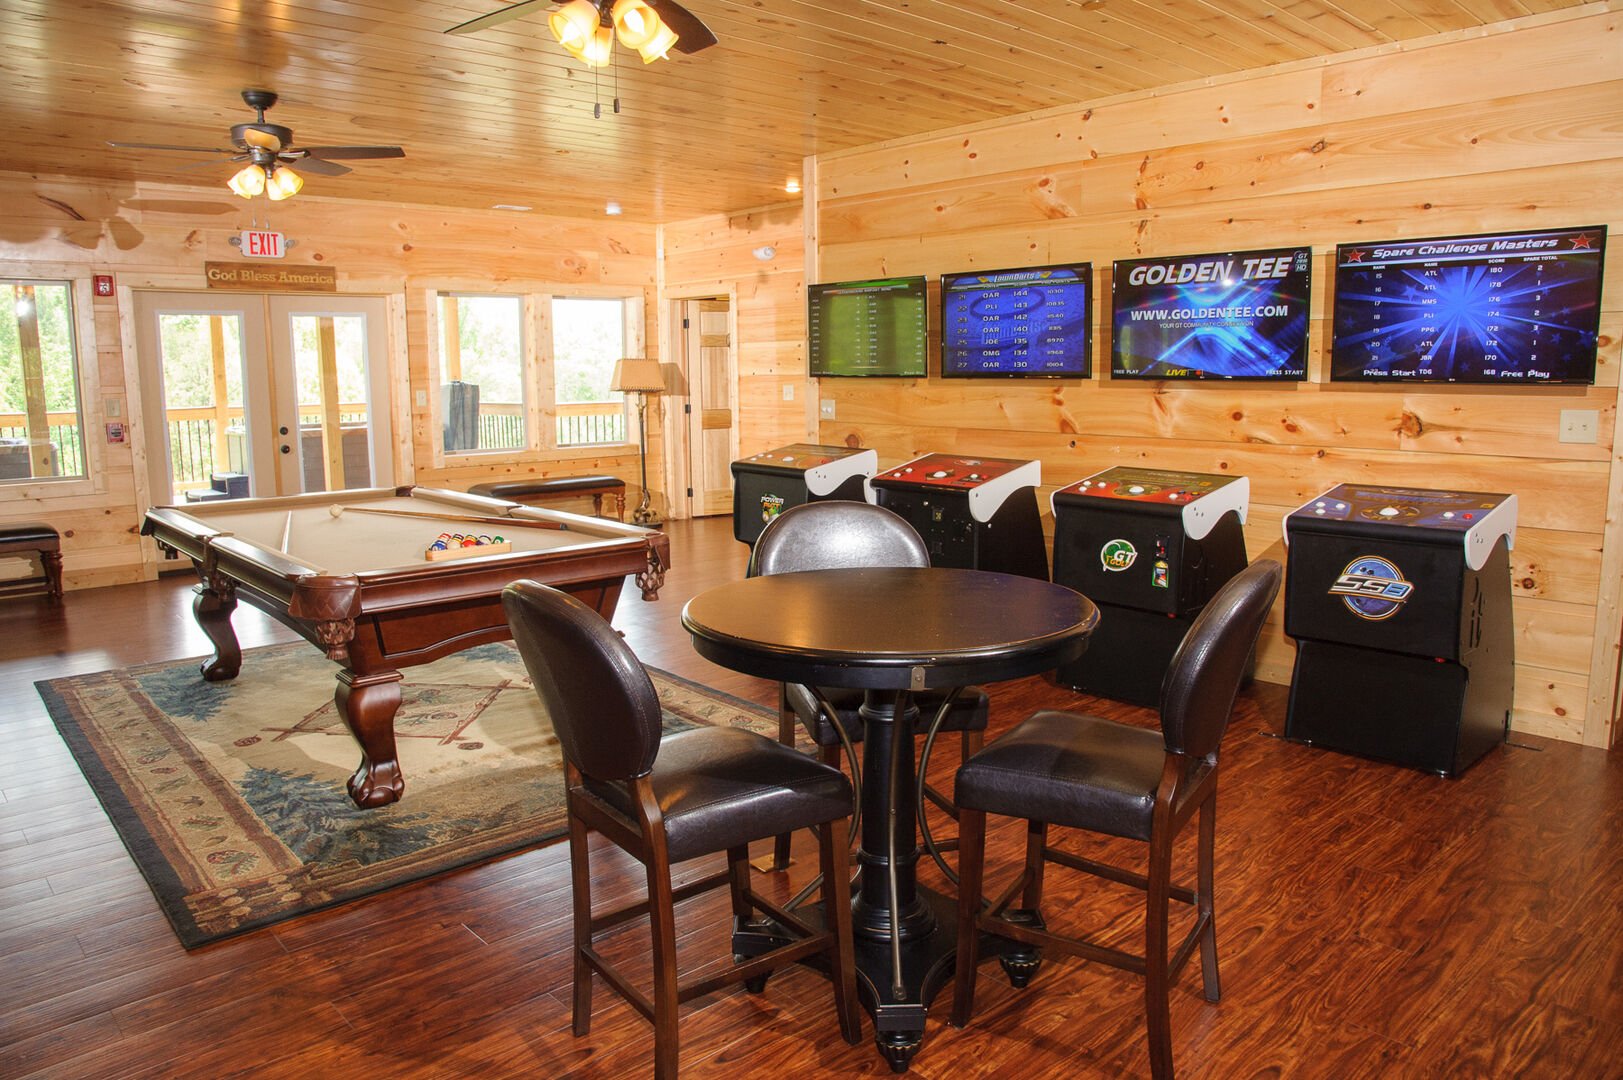 Image of Game Room in the Luxury Cabin Rental in Gatlinburg TN.